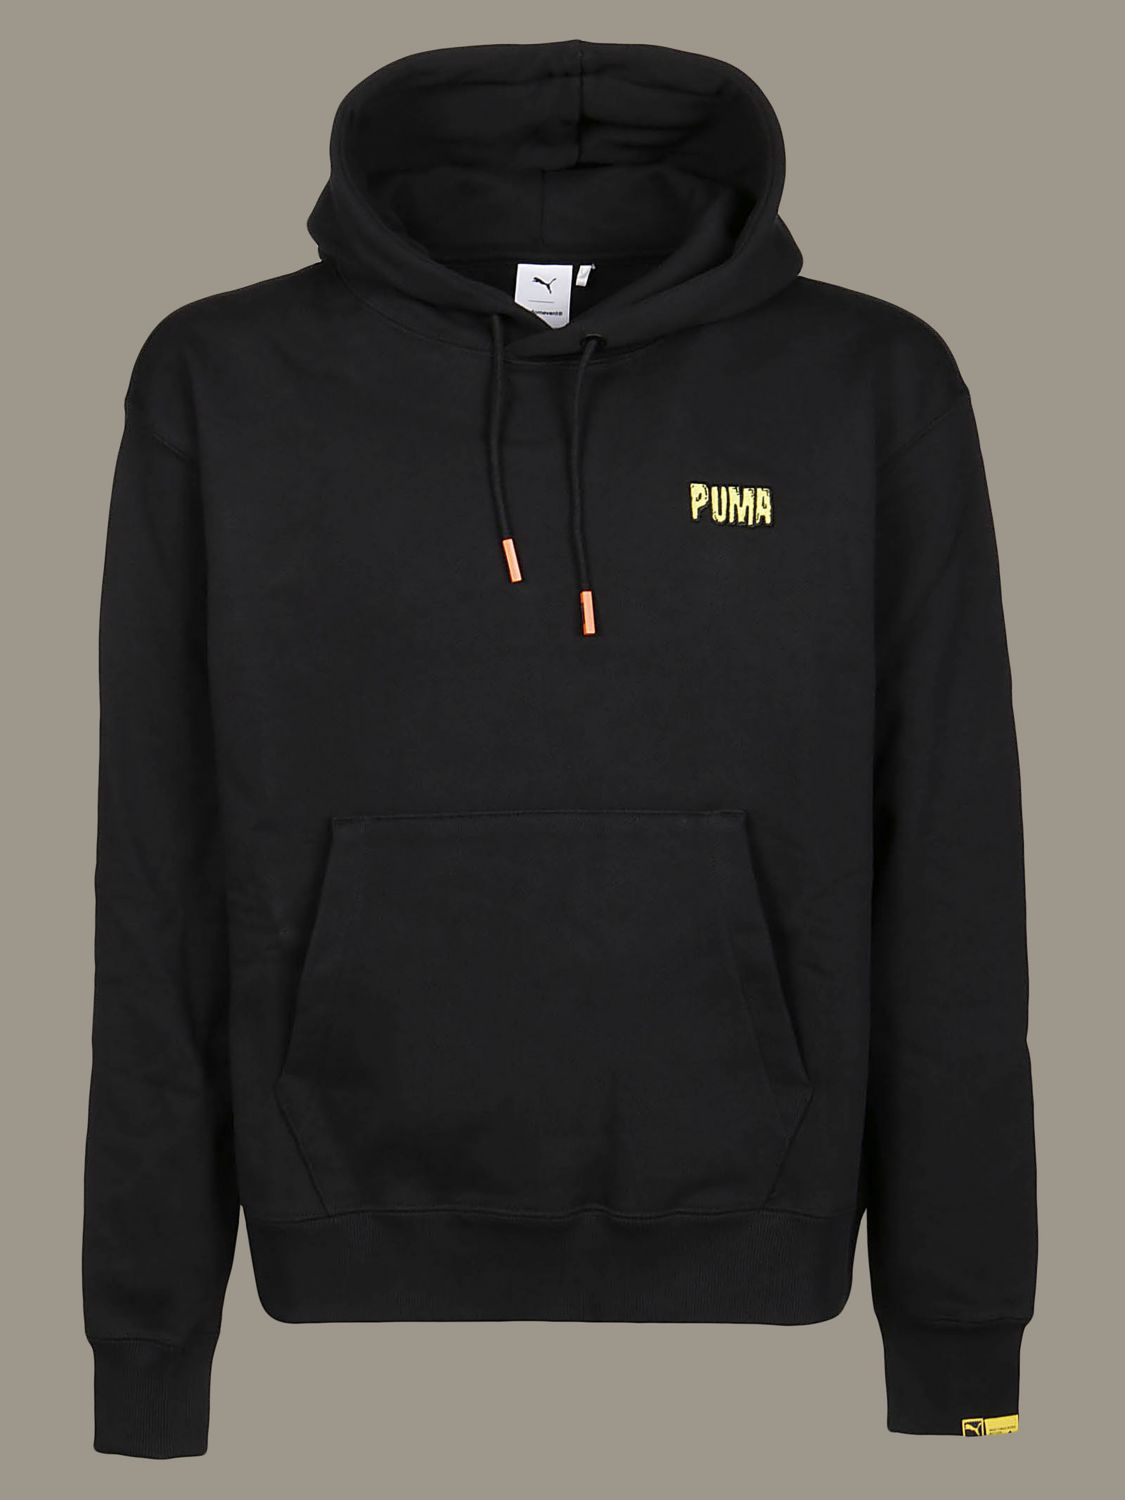 mens black puma hoodie